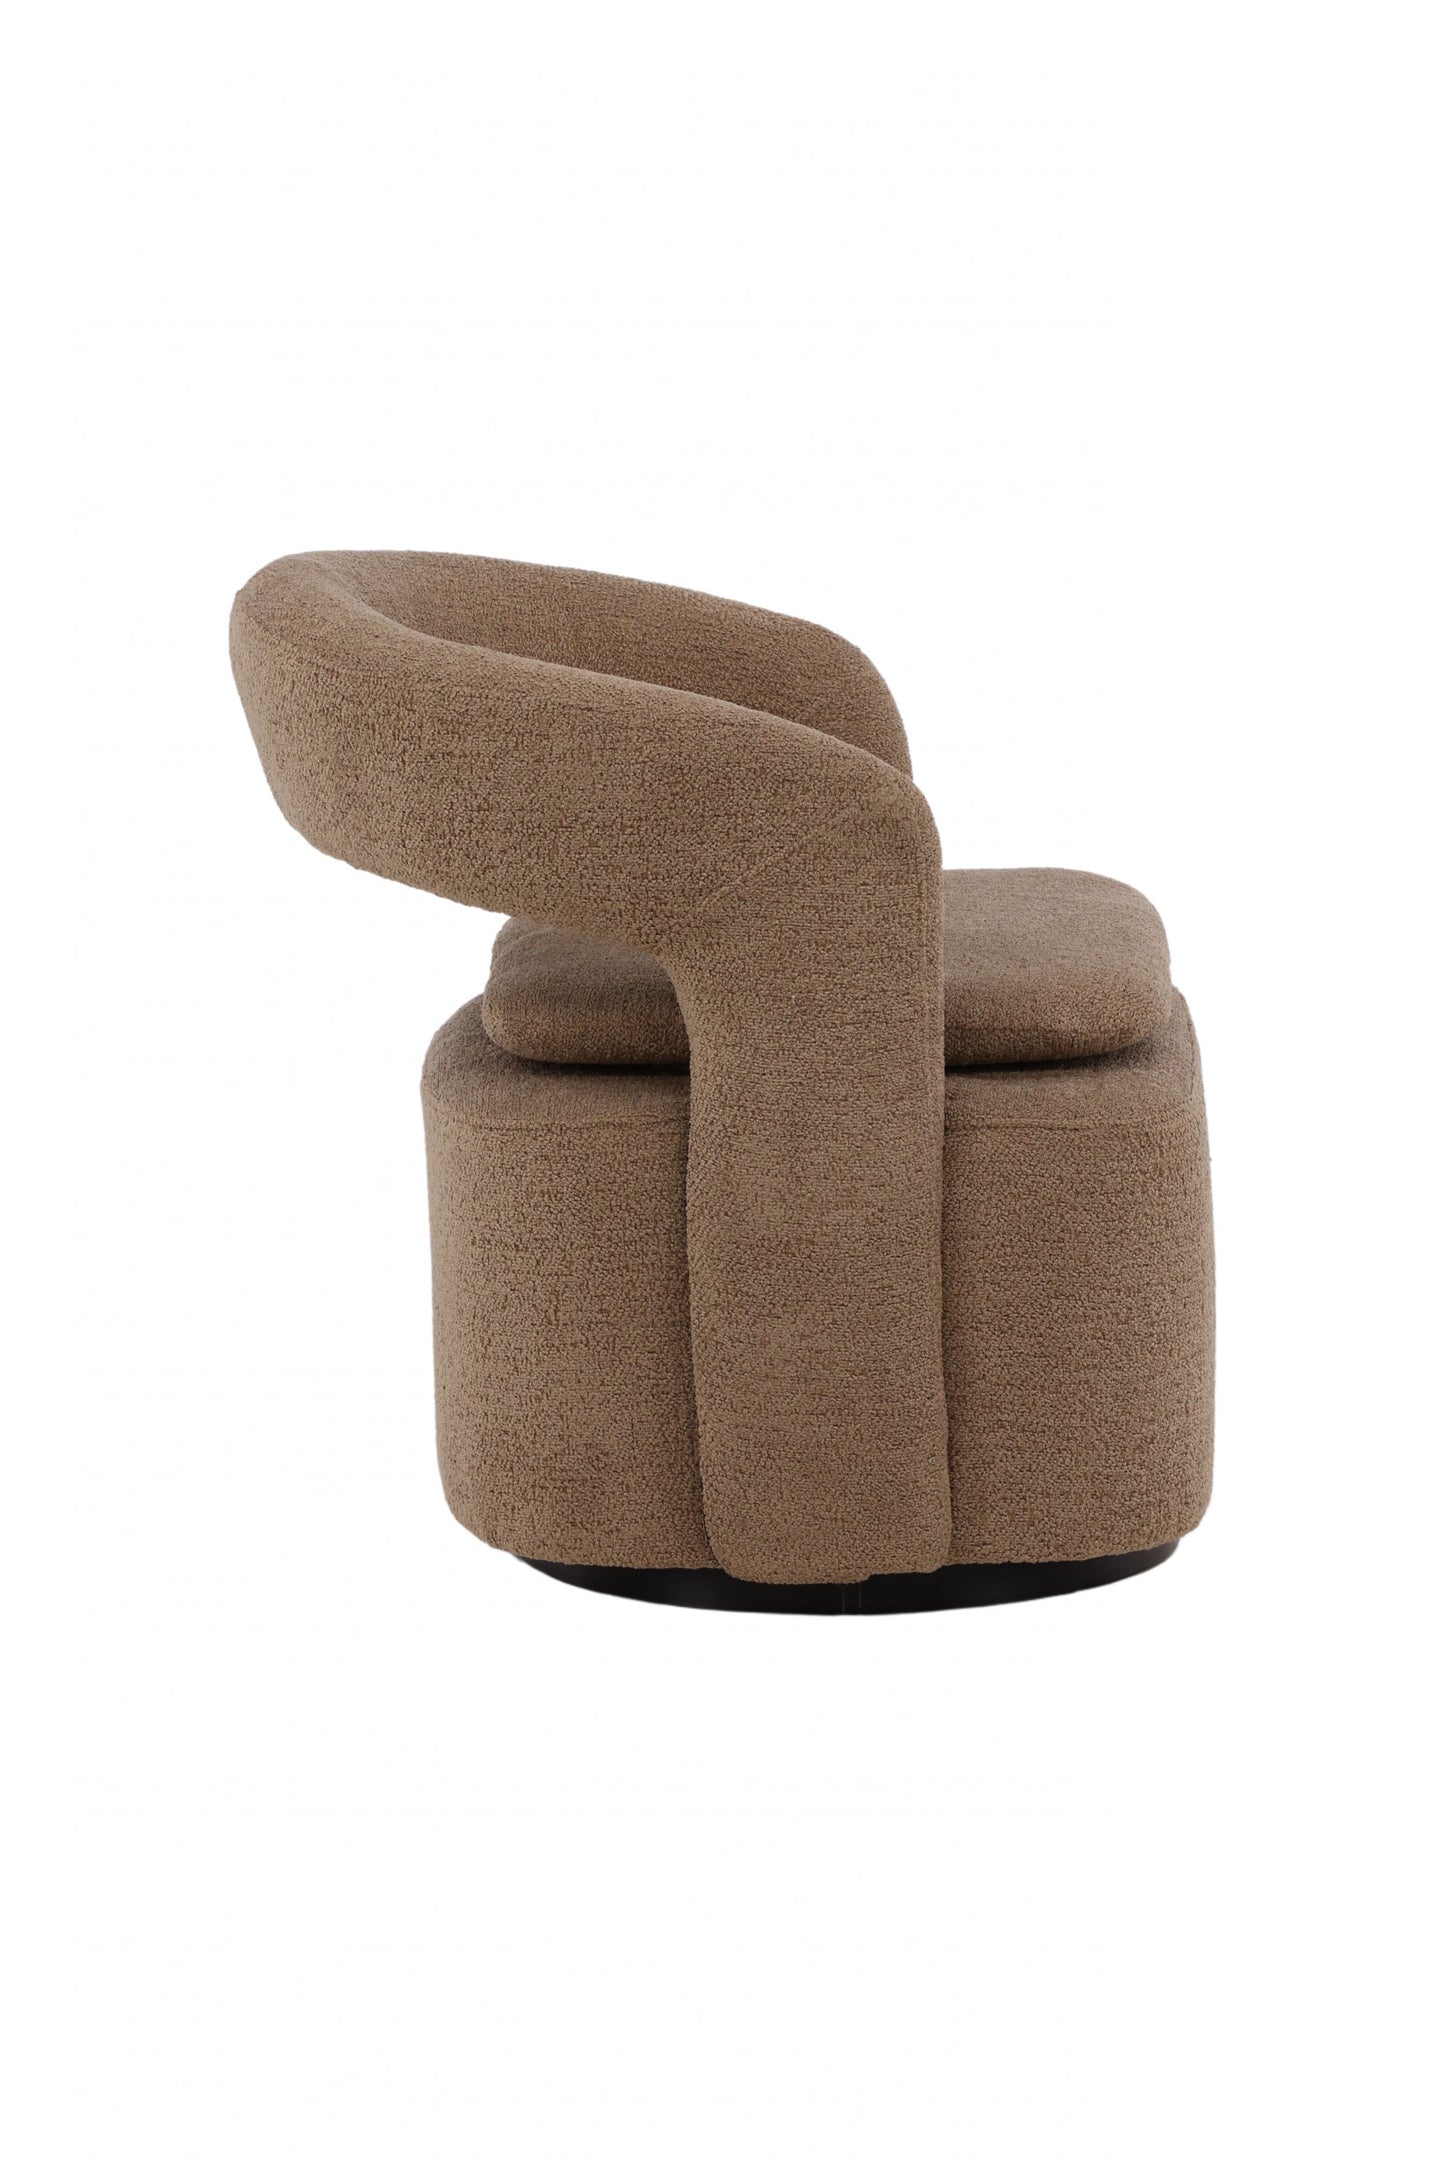 Venture Design | Laurel Lounge Chair - Svart / Beige Boucle